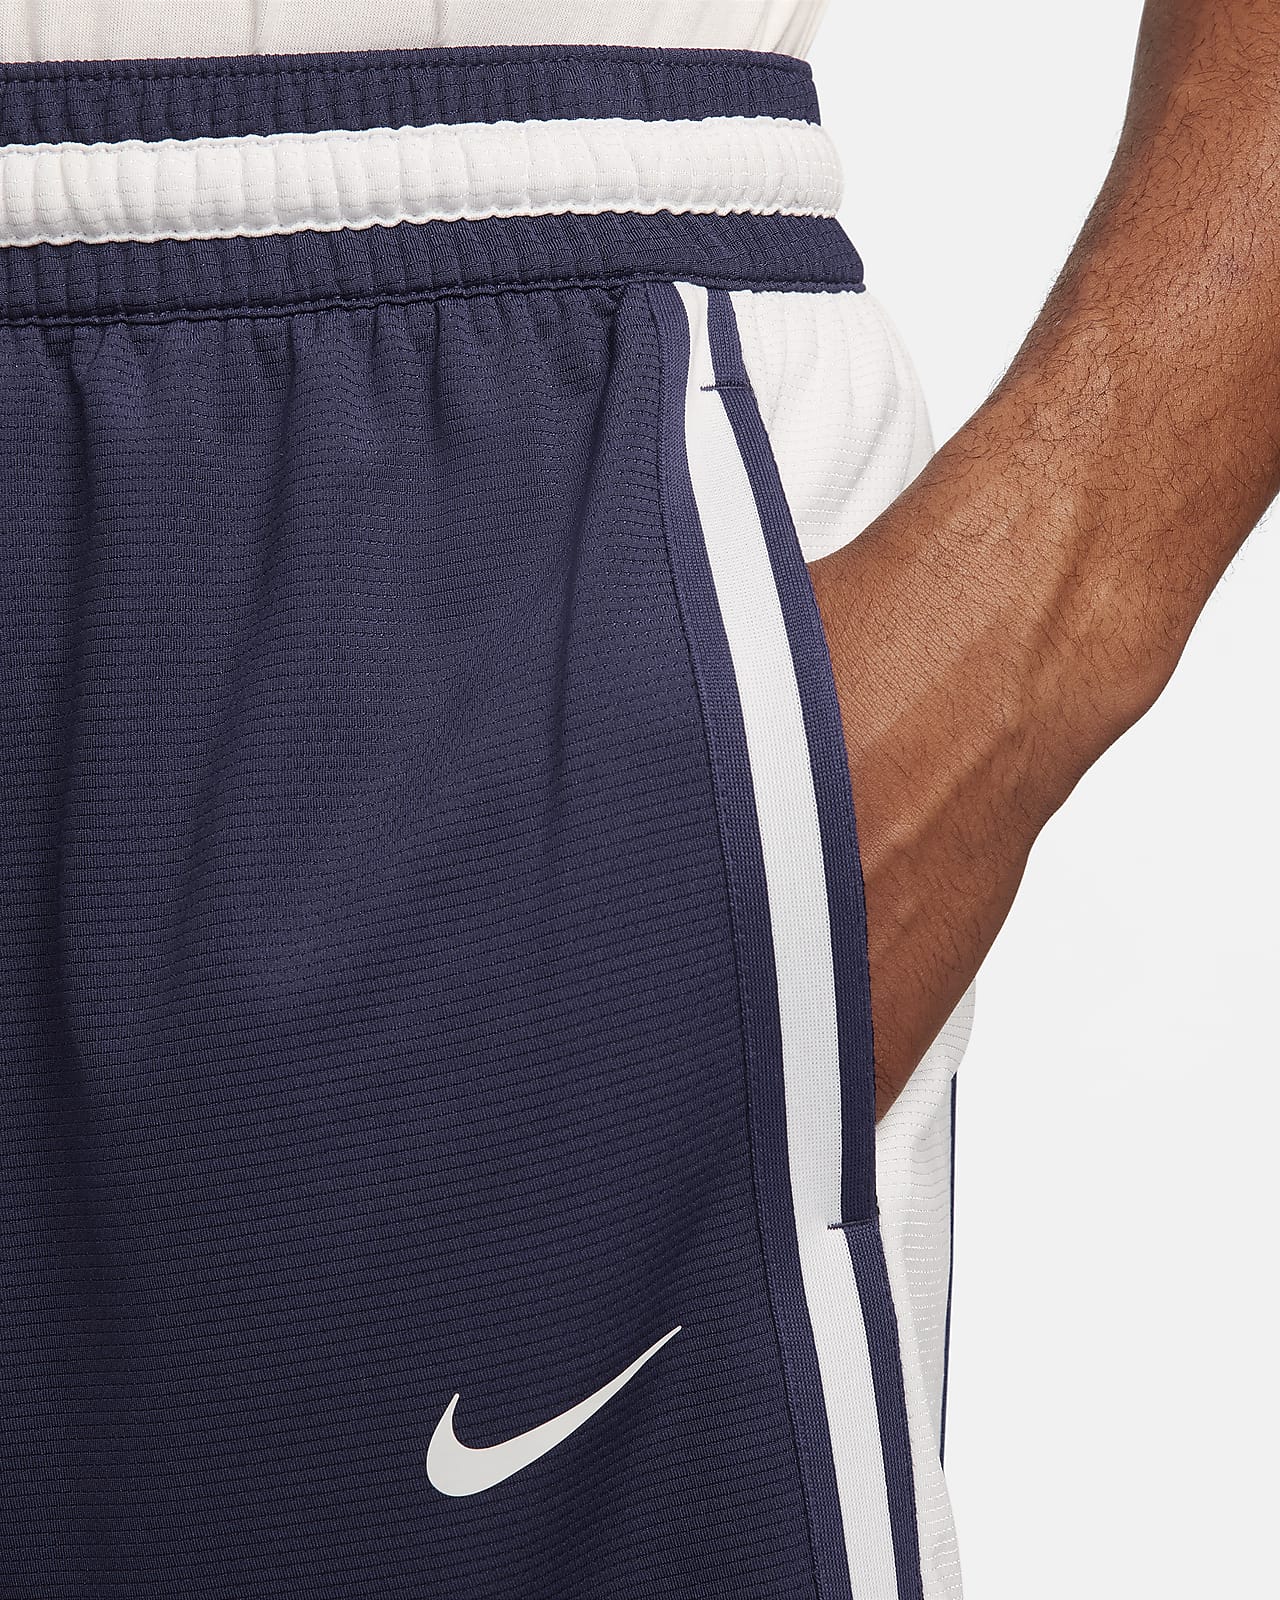 Men's NBA Nike Gray DNA Shorts